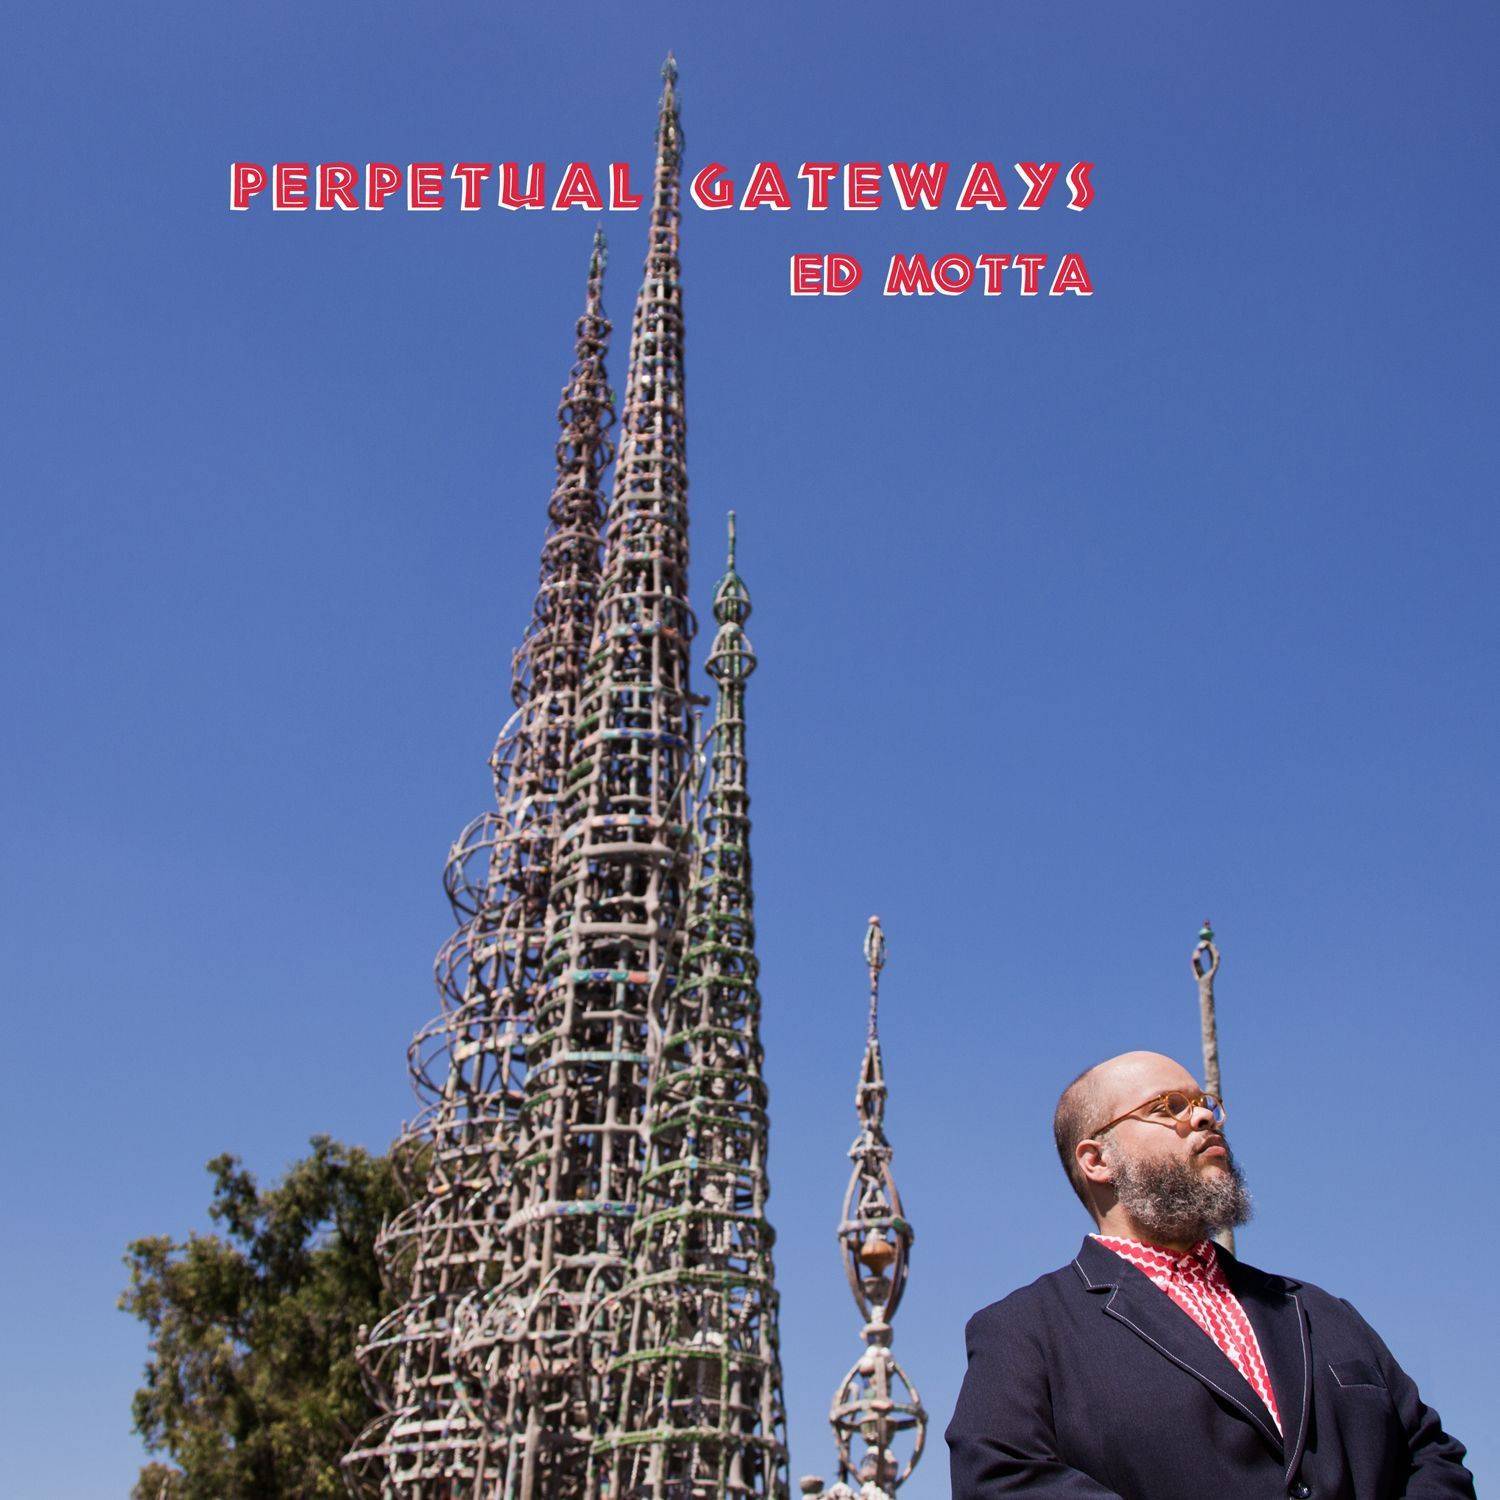 Perpetual Gateways